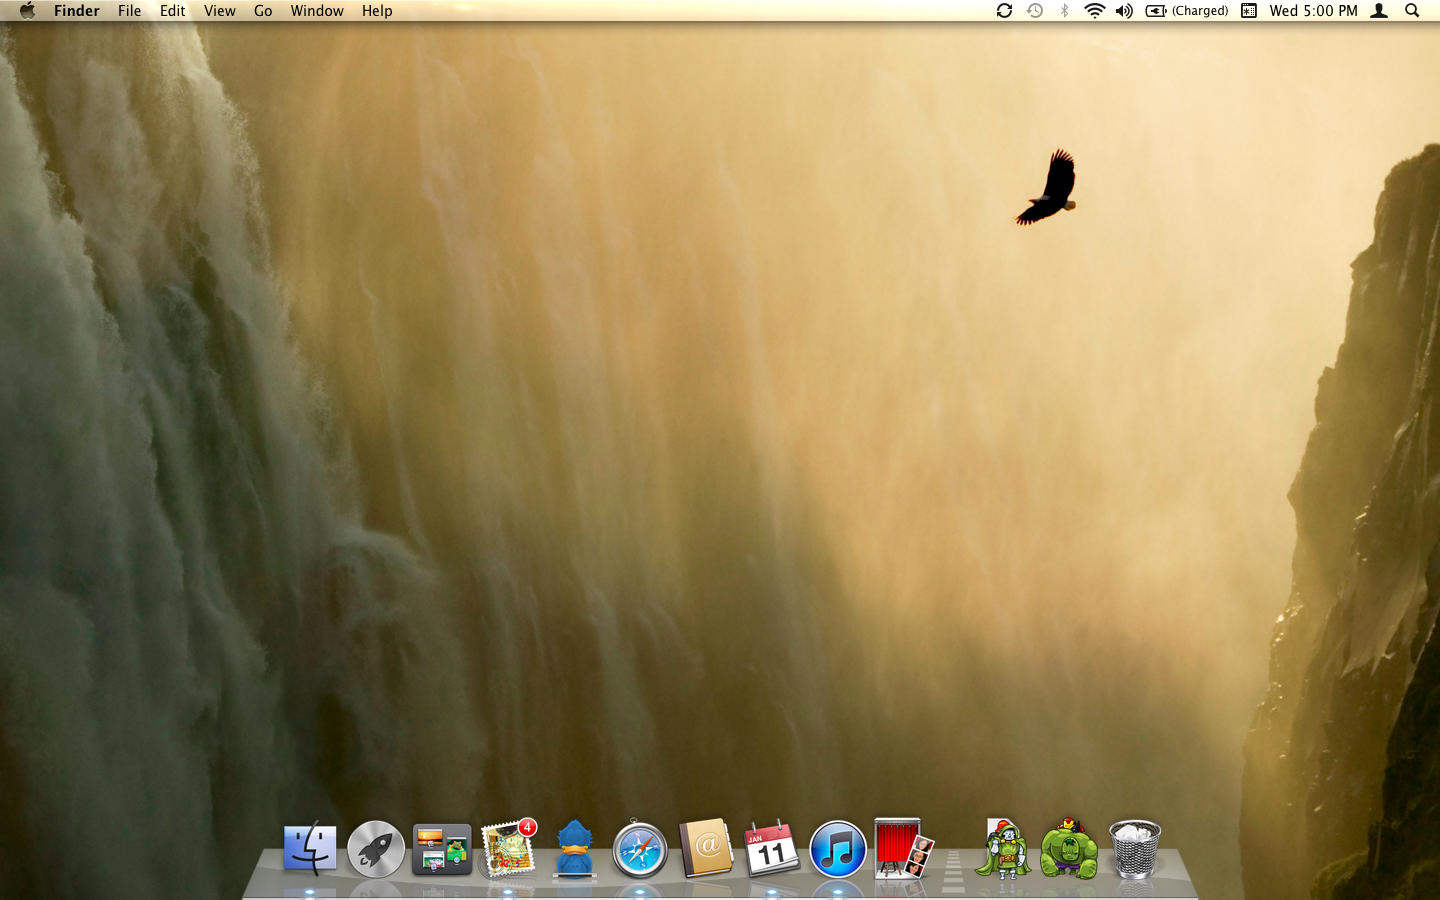 get more desktop pictures for mac